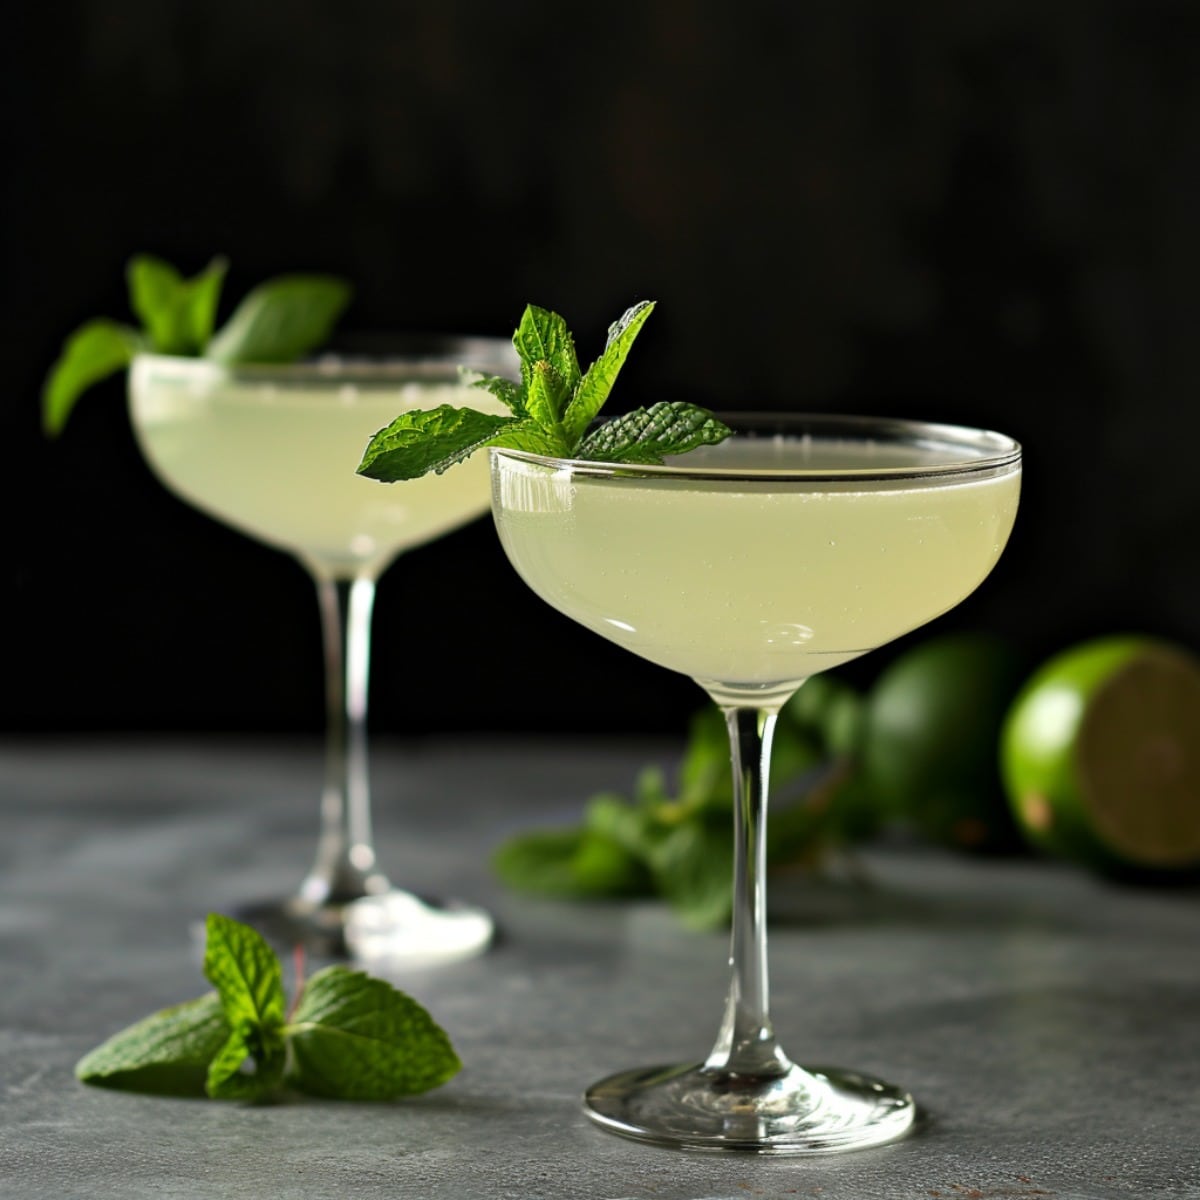 2 Southside Cocktails with mint garnish